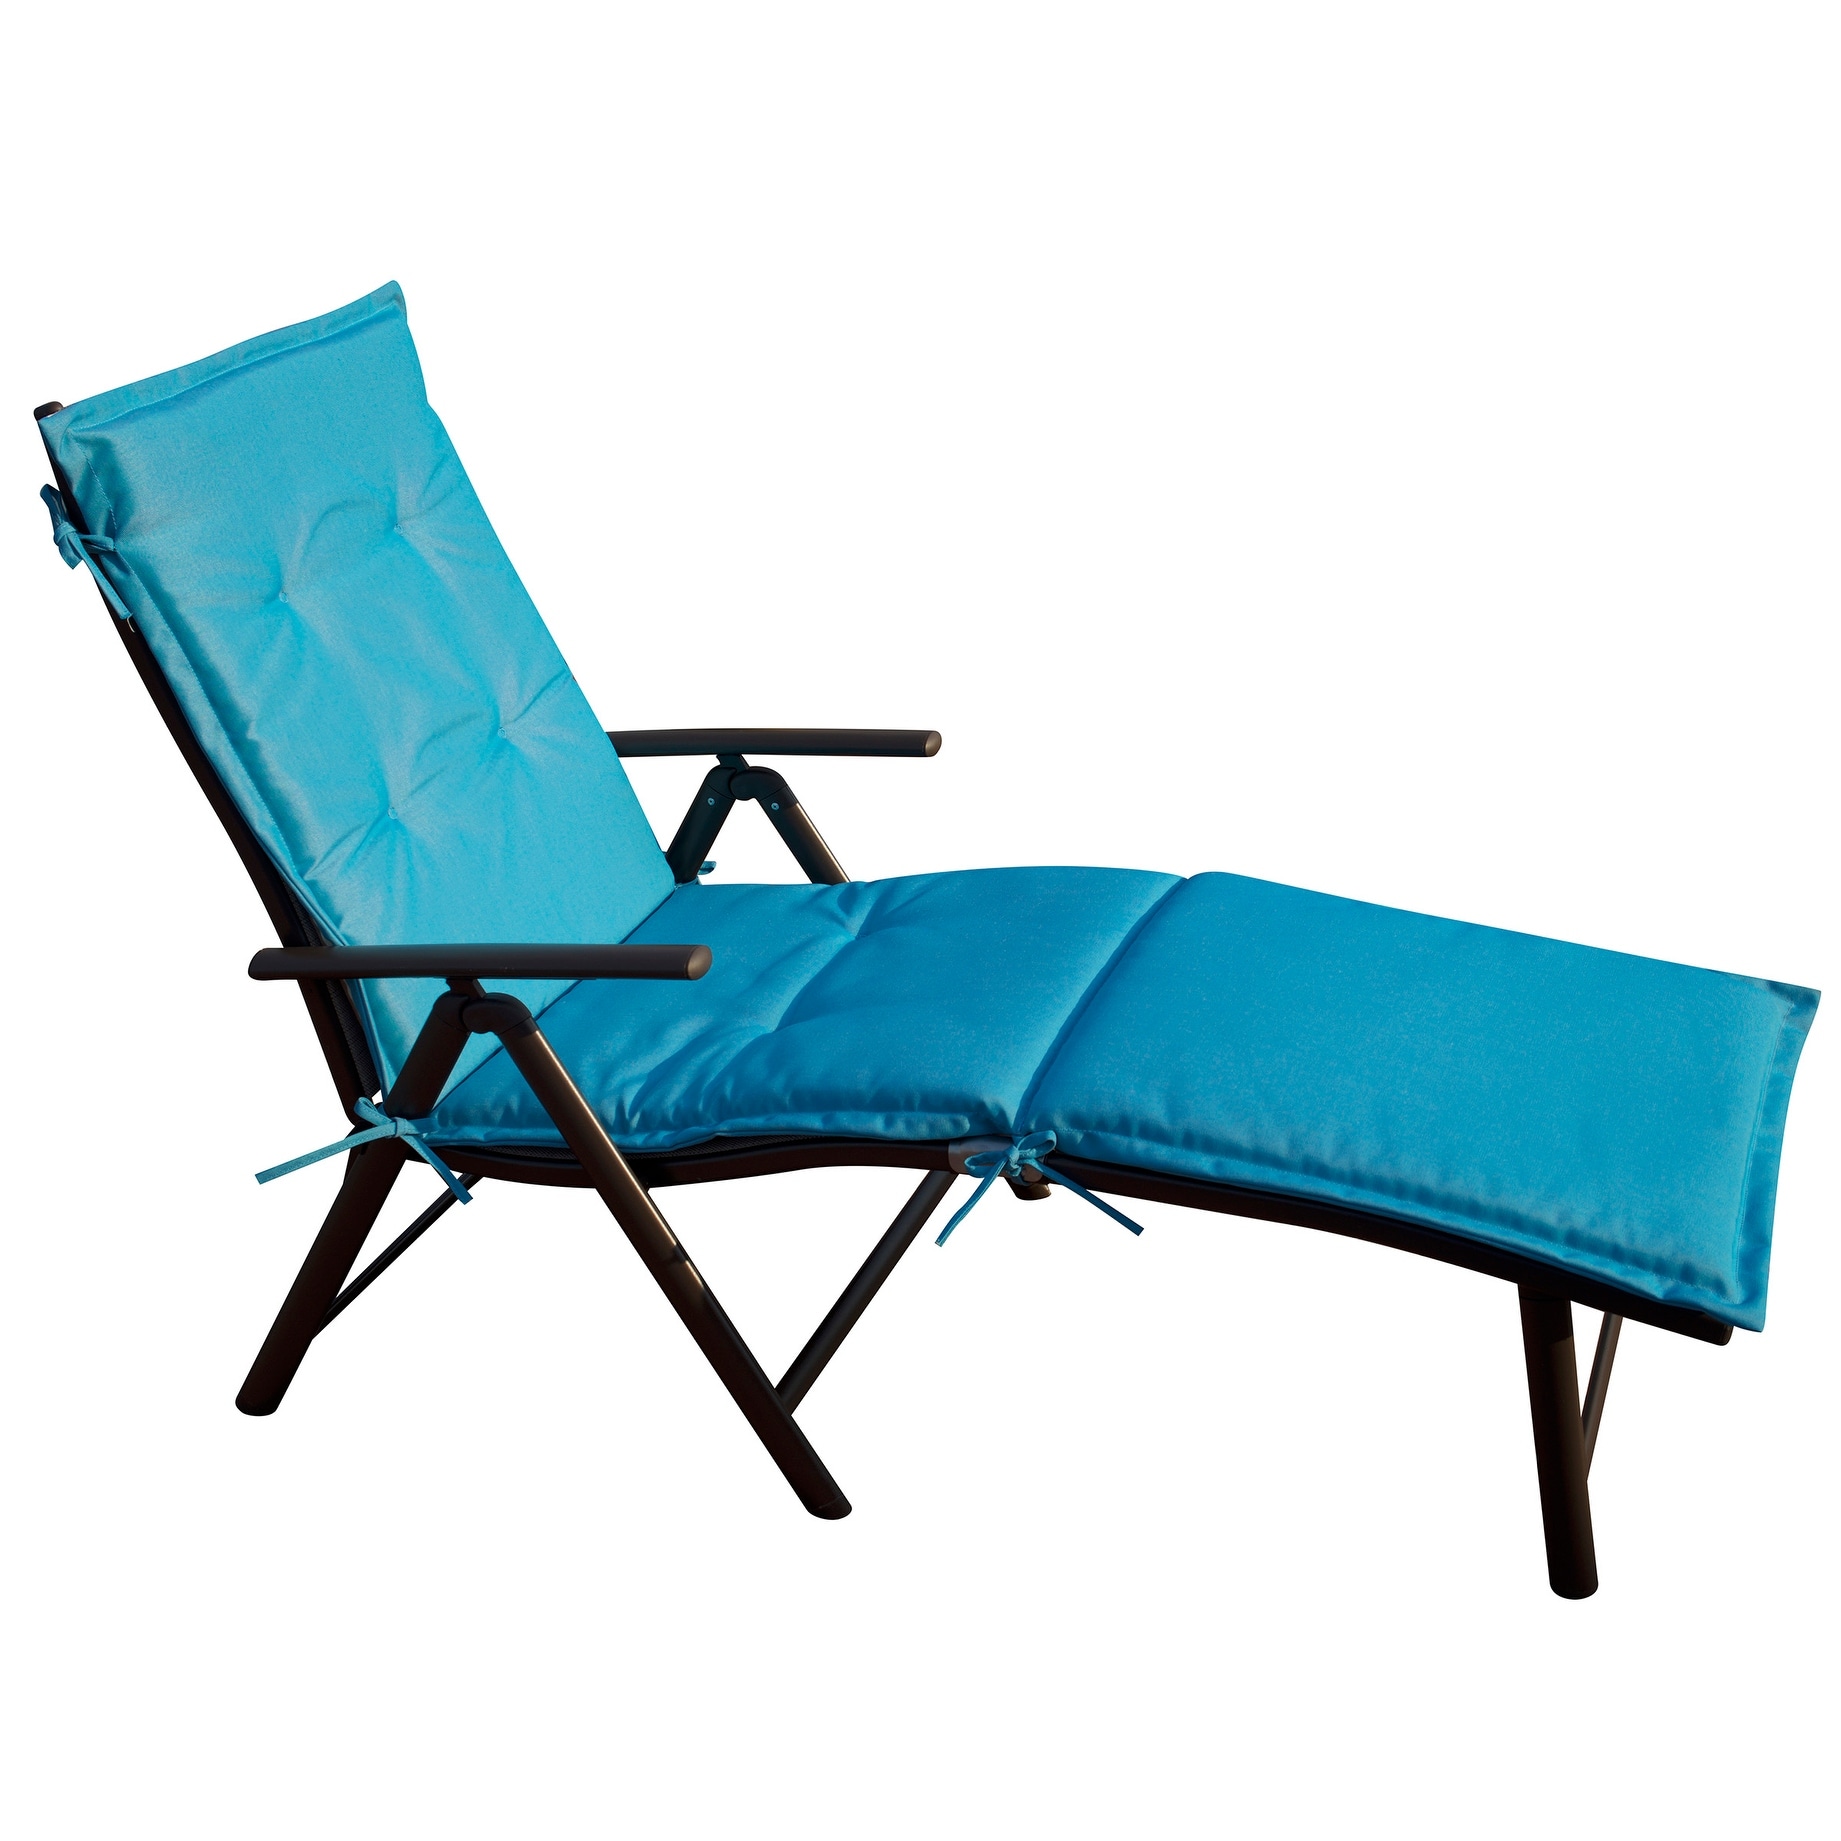 Kozyard Reclining Lounge Chair Cushion (3 Color Options)